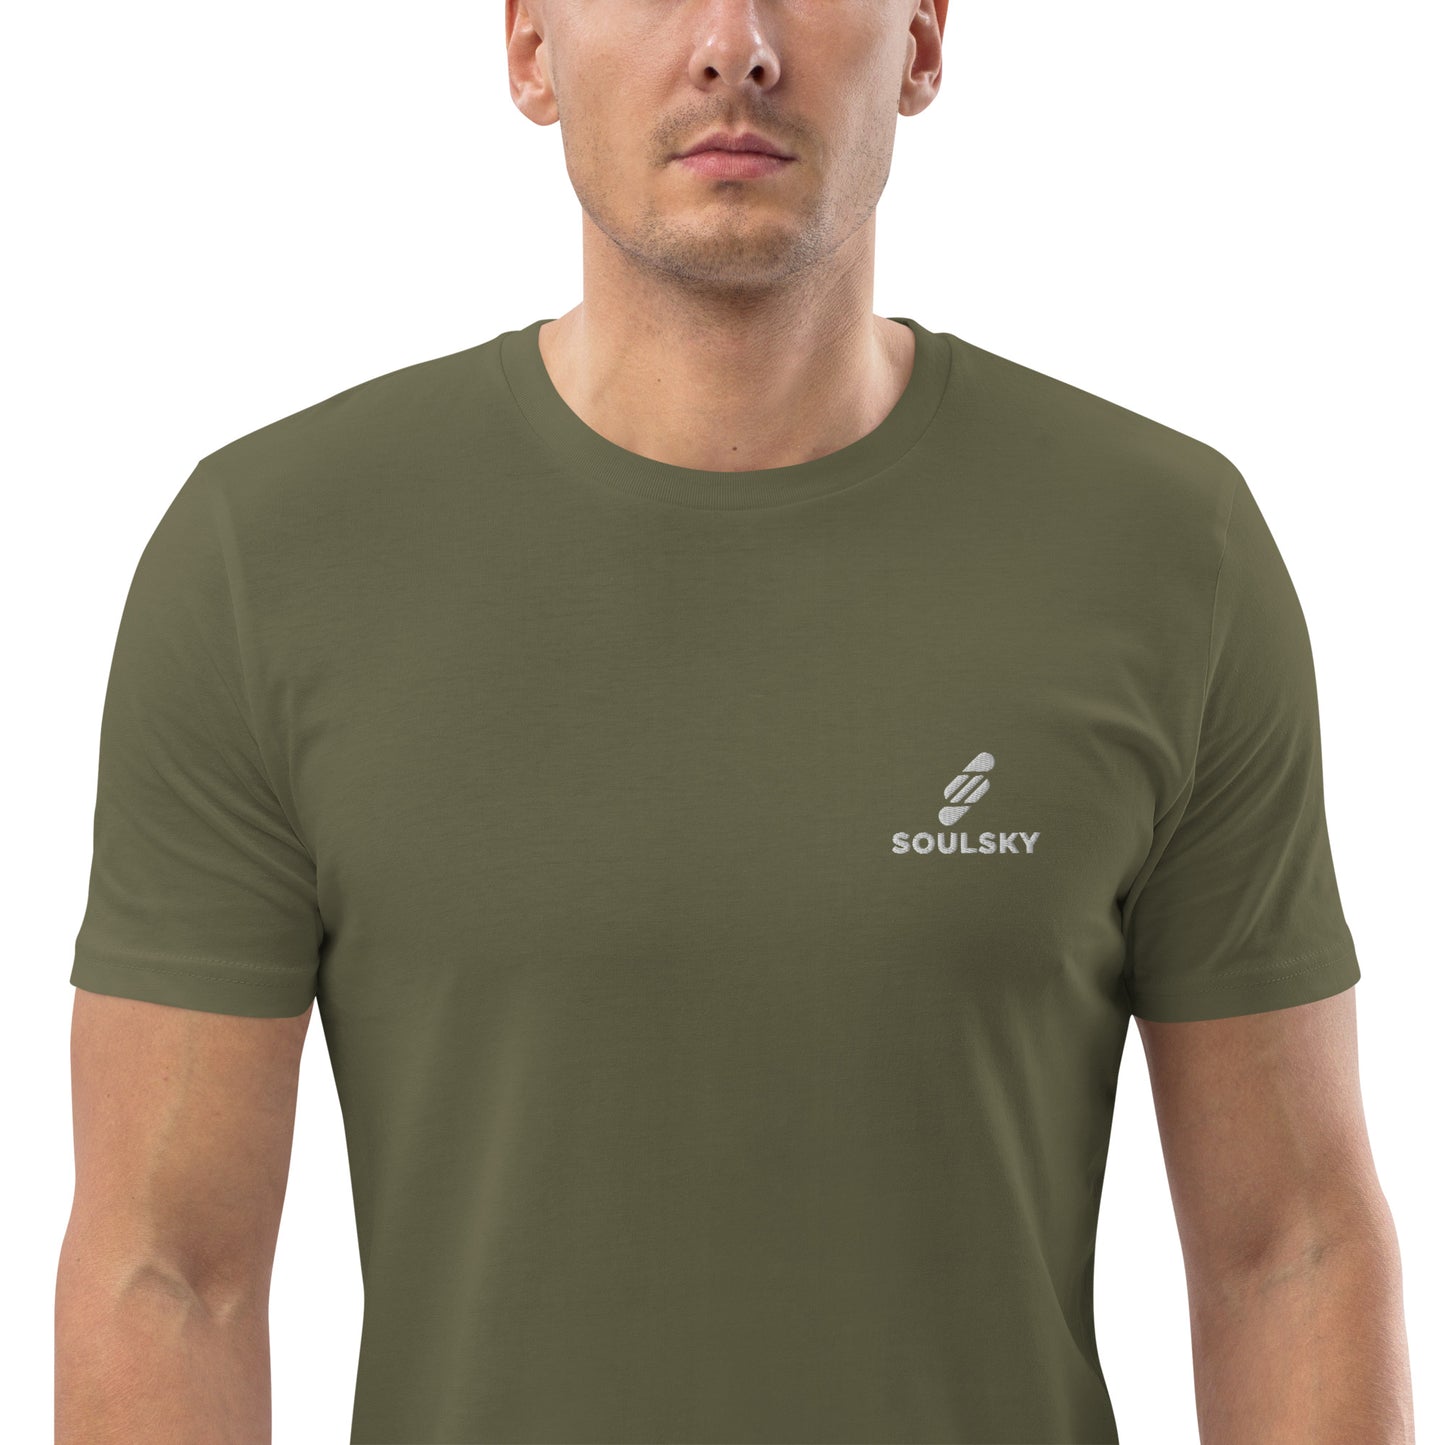 SOULSKY Logo Unisex Crewneck T-shirt - Olive Green